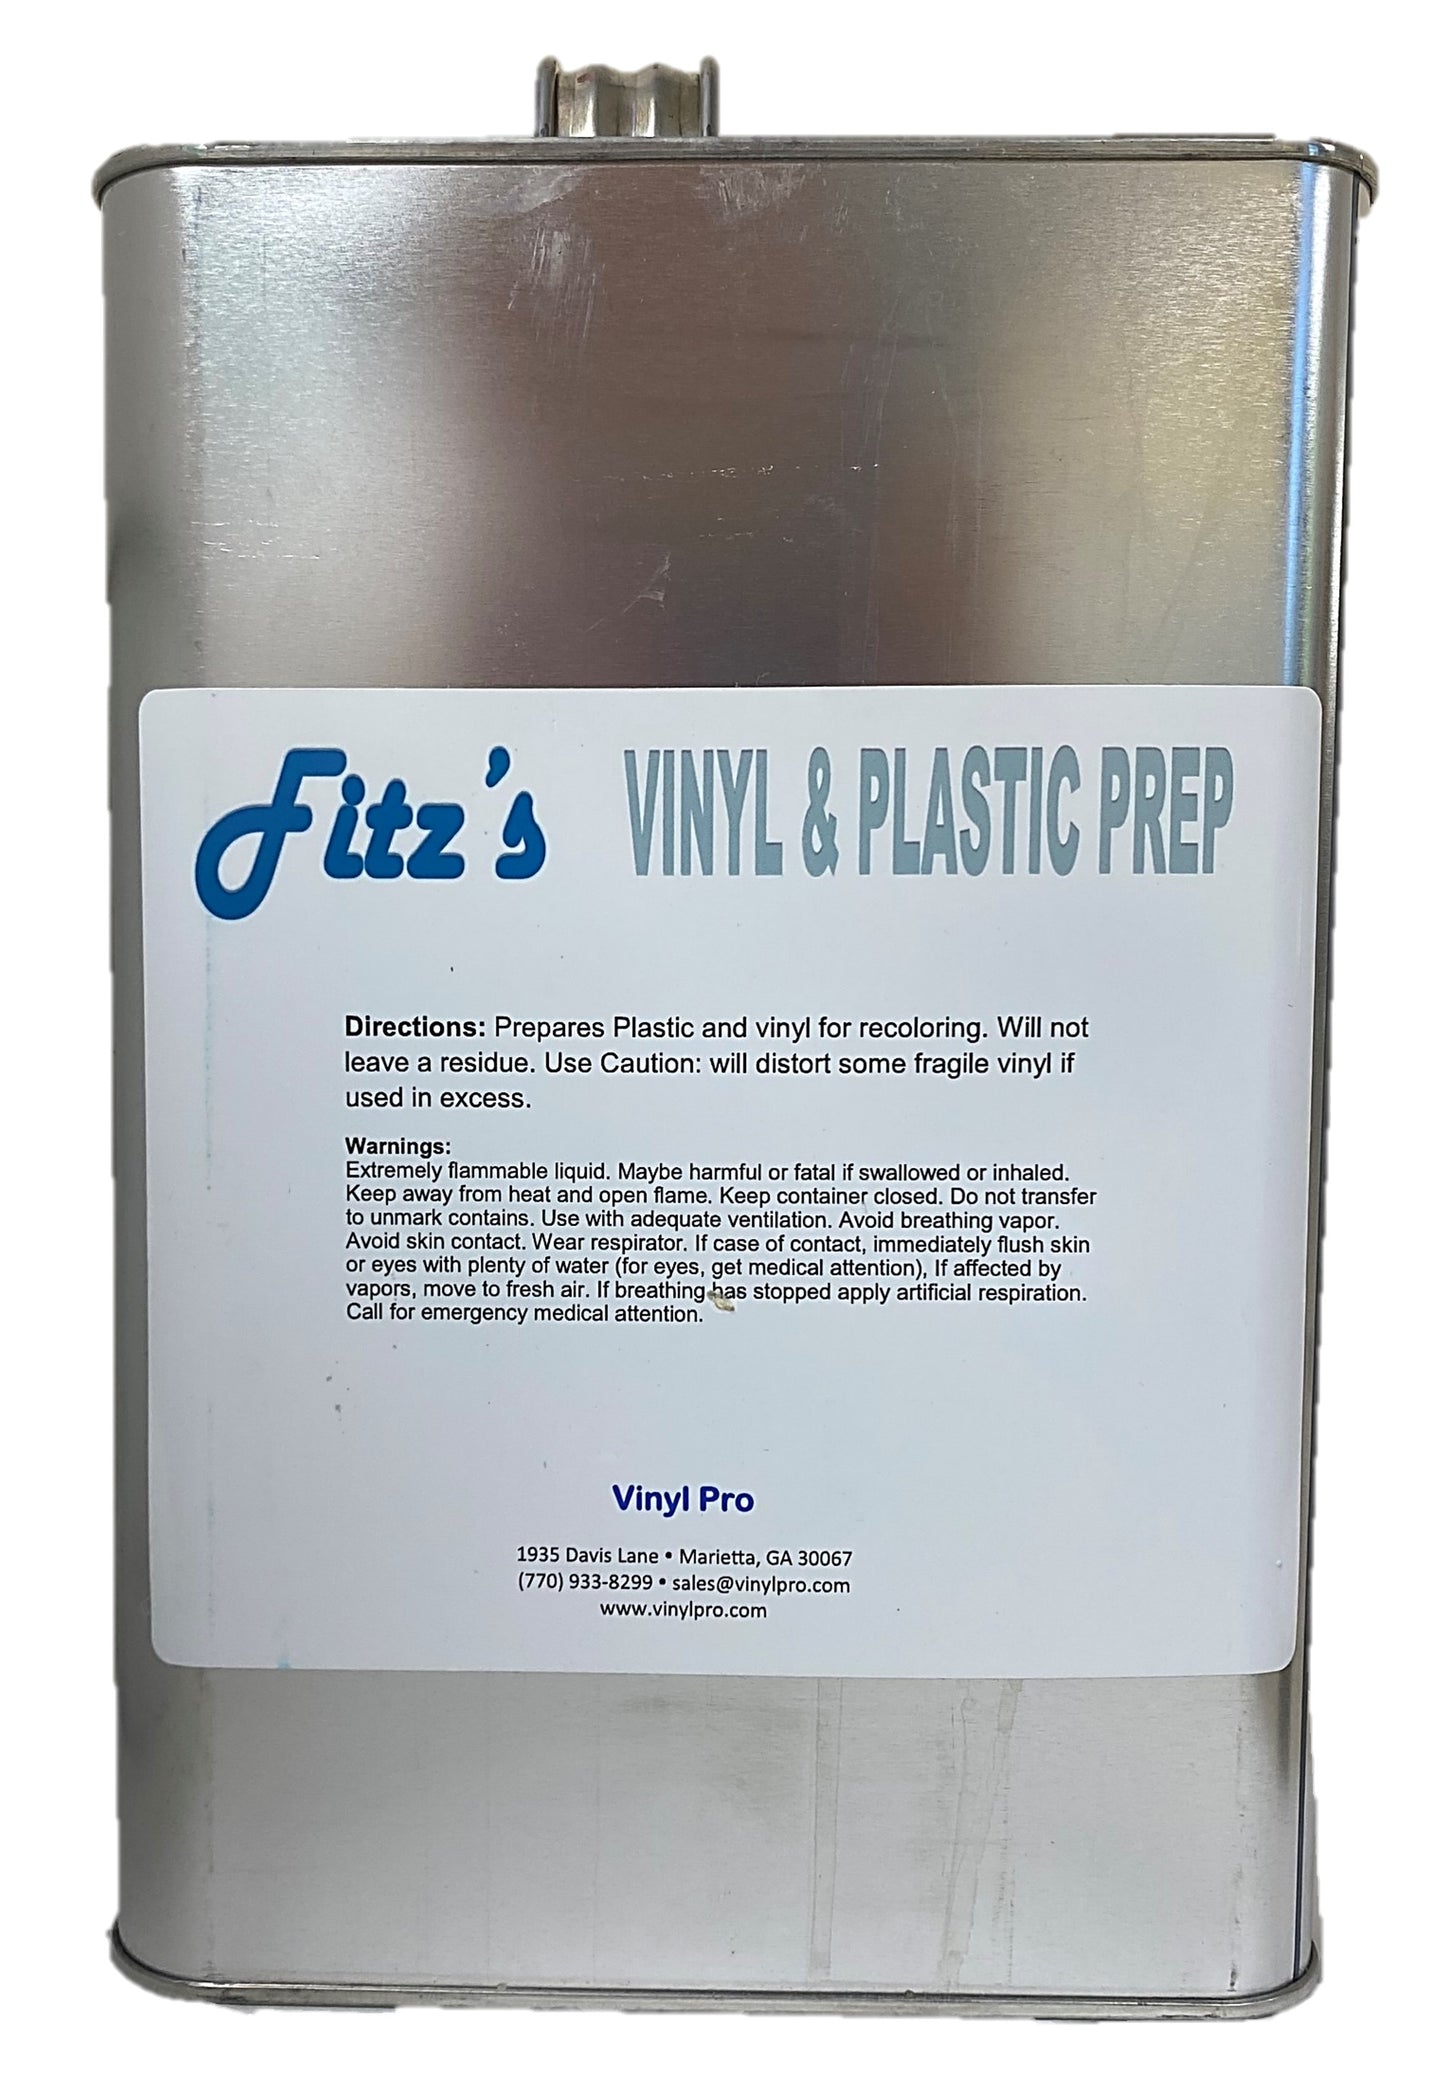 Vinyl and Plastic Prep